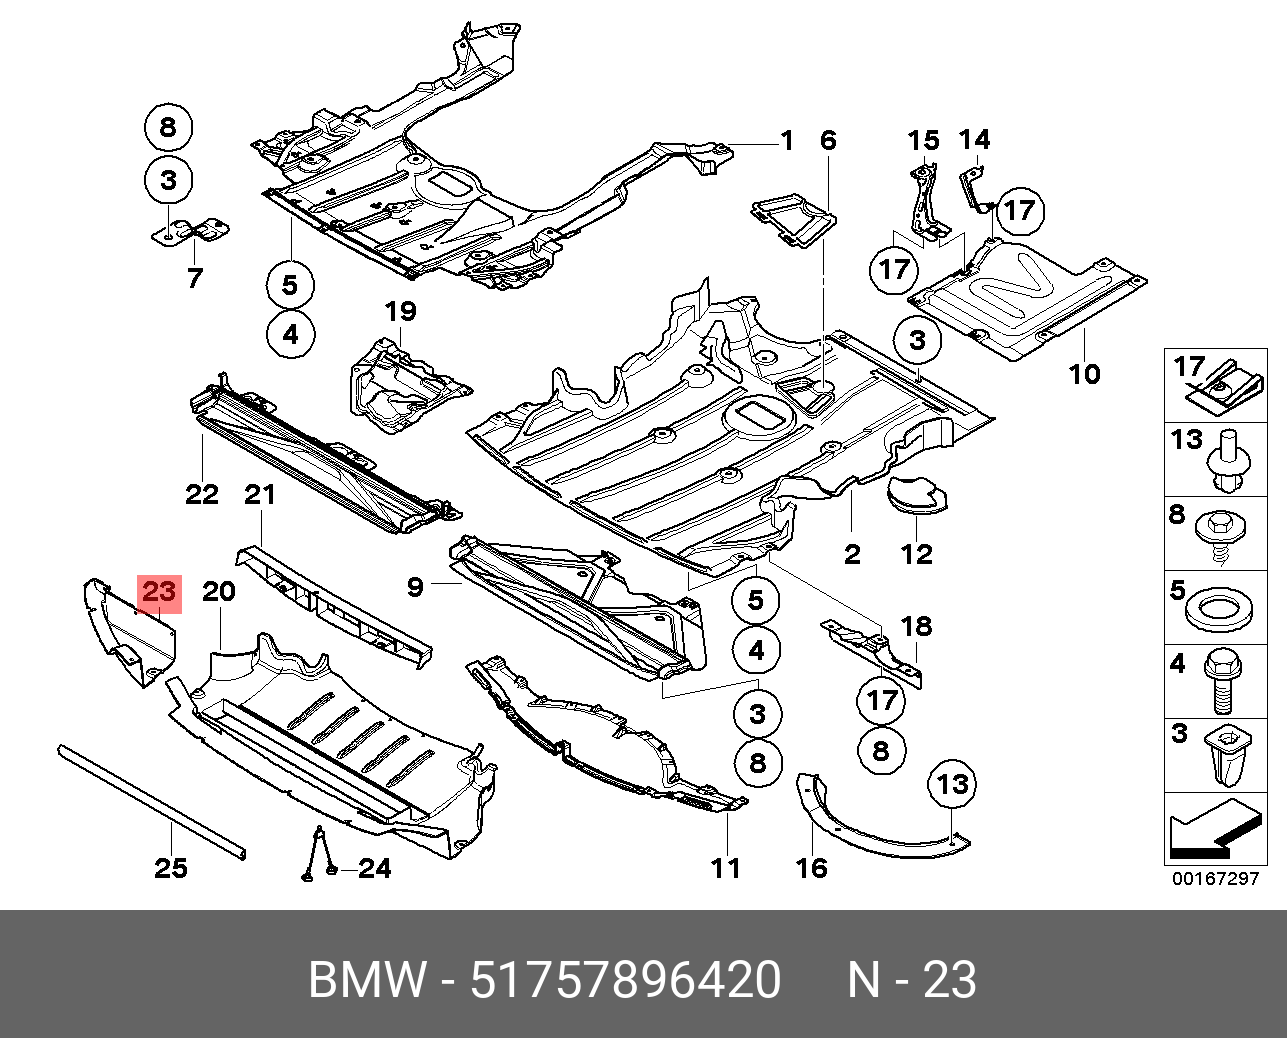 E n parts. Защита днища БМВ е90. Комплект днища BMW e90. Схема защиты двигателя БМВ е90. Крепеж пыльника днища BMW e92.